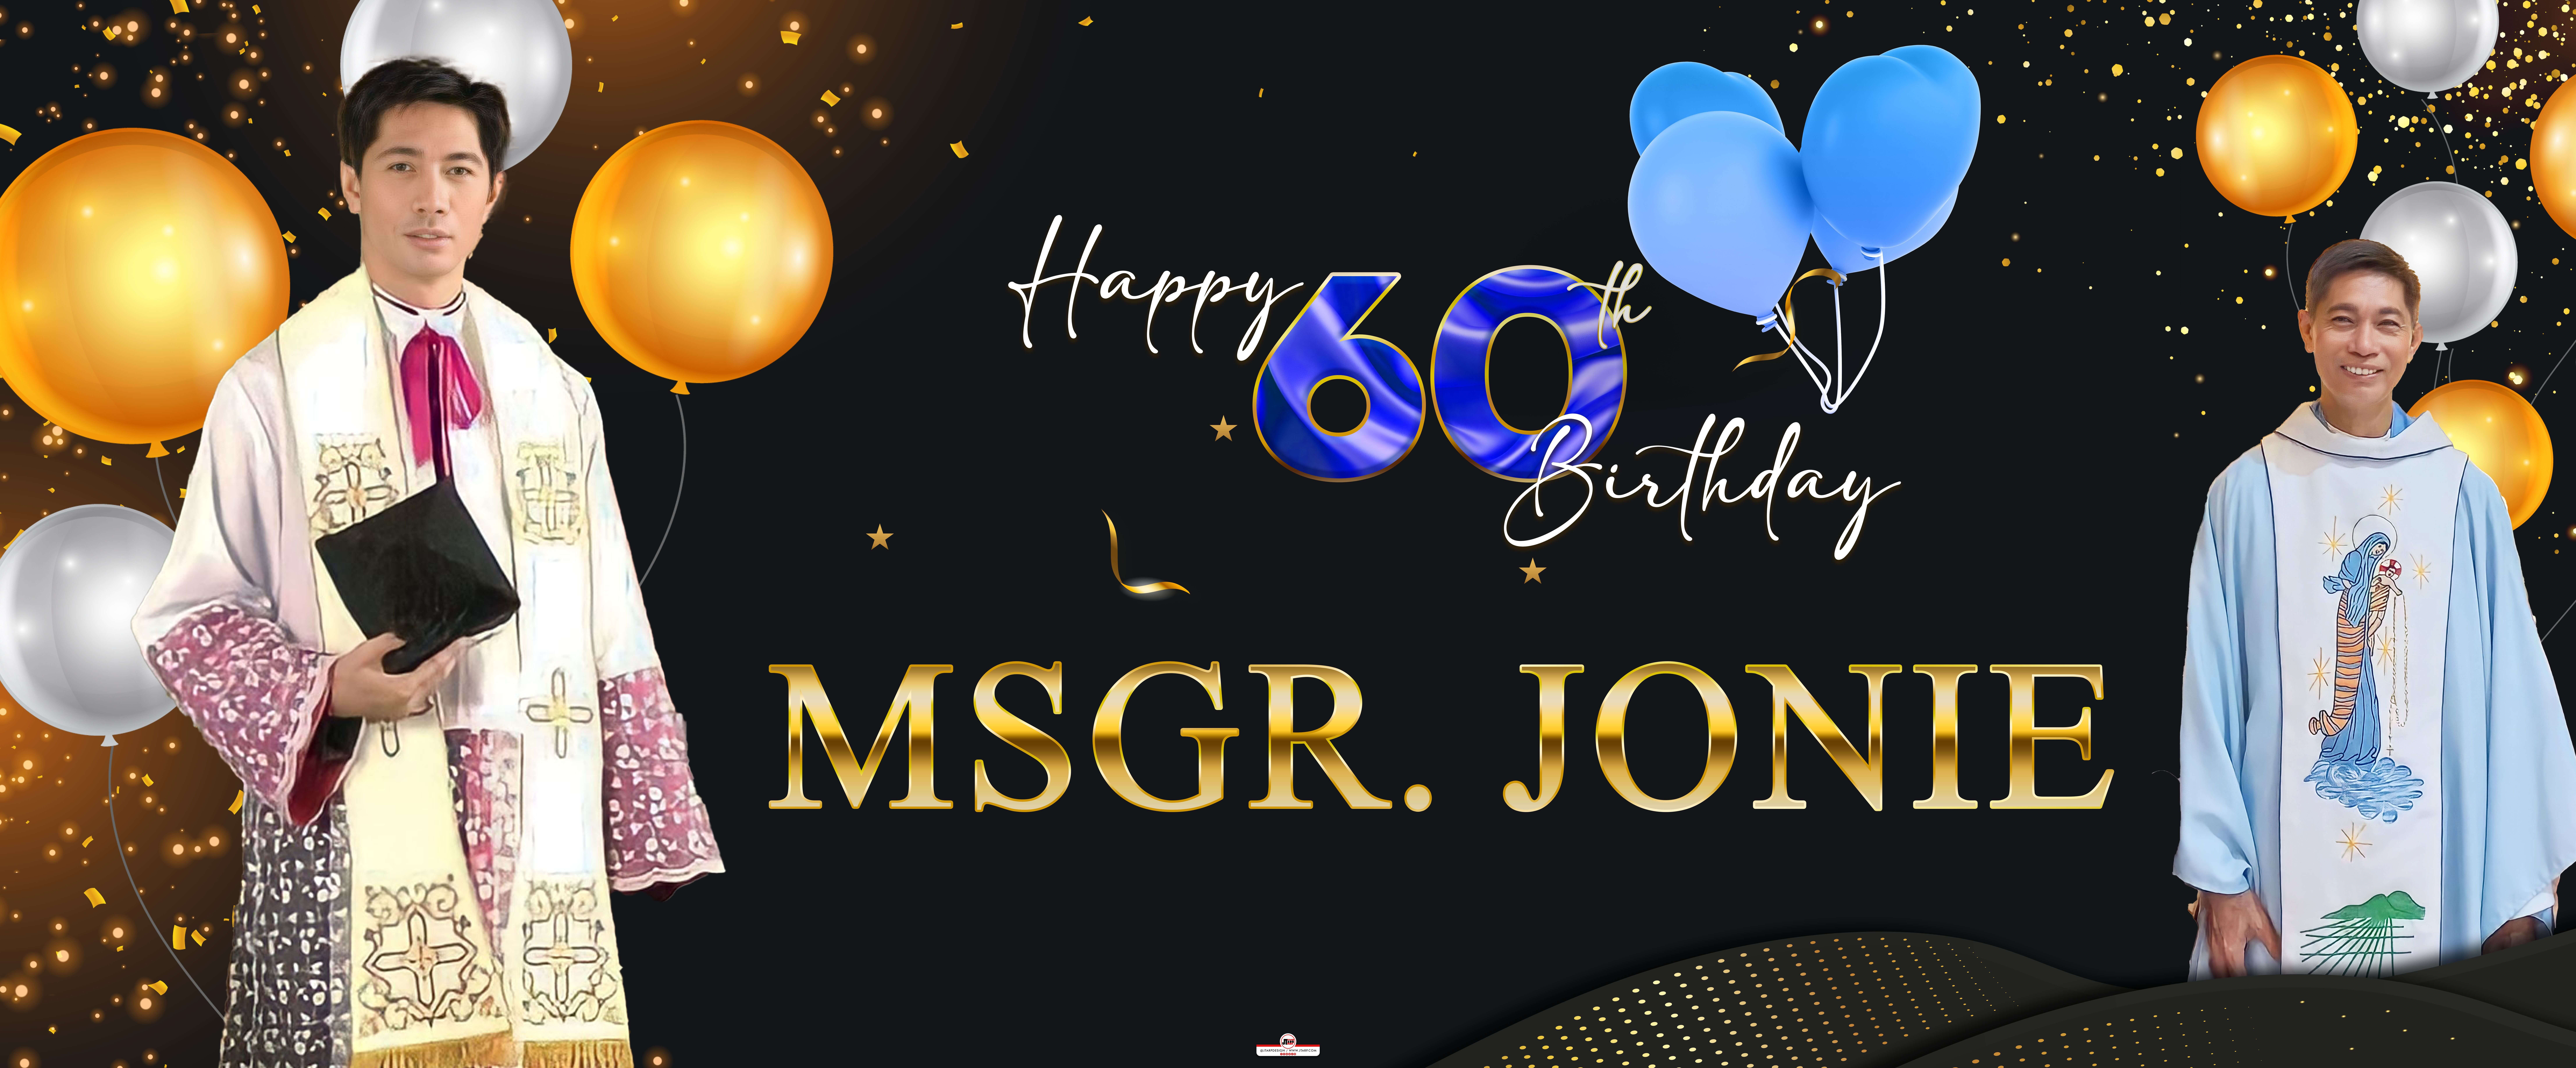 Black Gold Theme Happy 60th birthday Msgr. Jonie copy